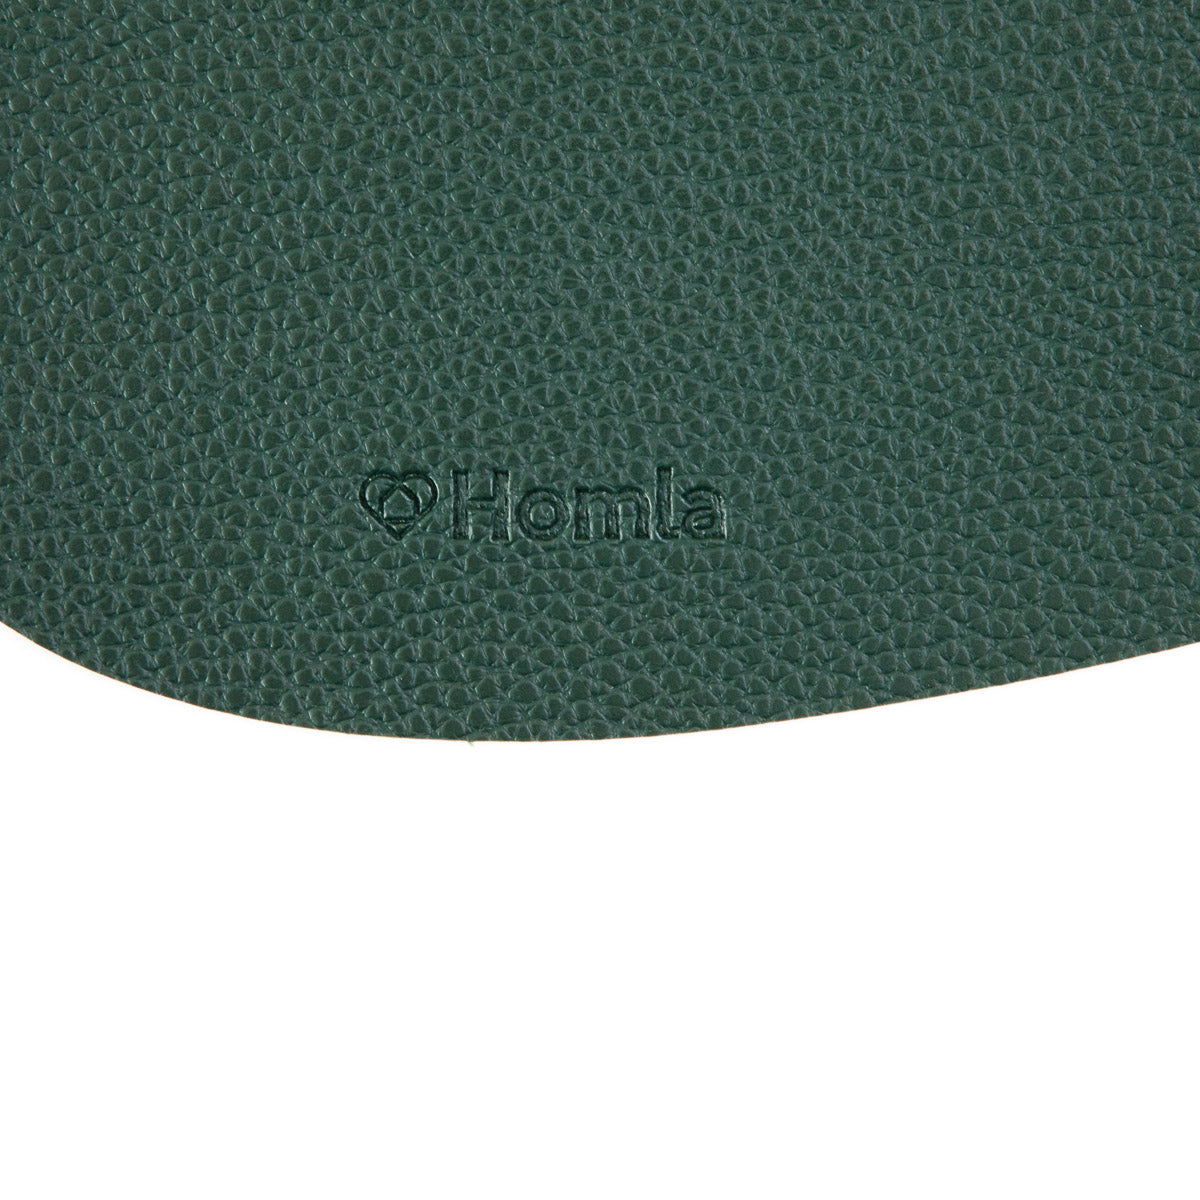 Suport Farfurii de Masa Femelo Verde 38 cm